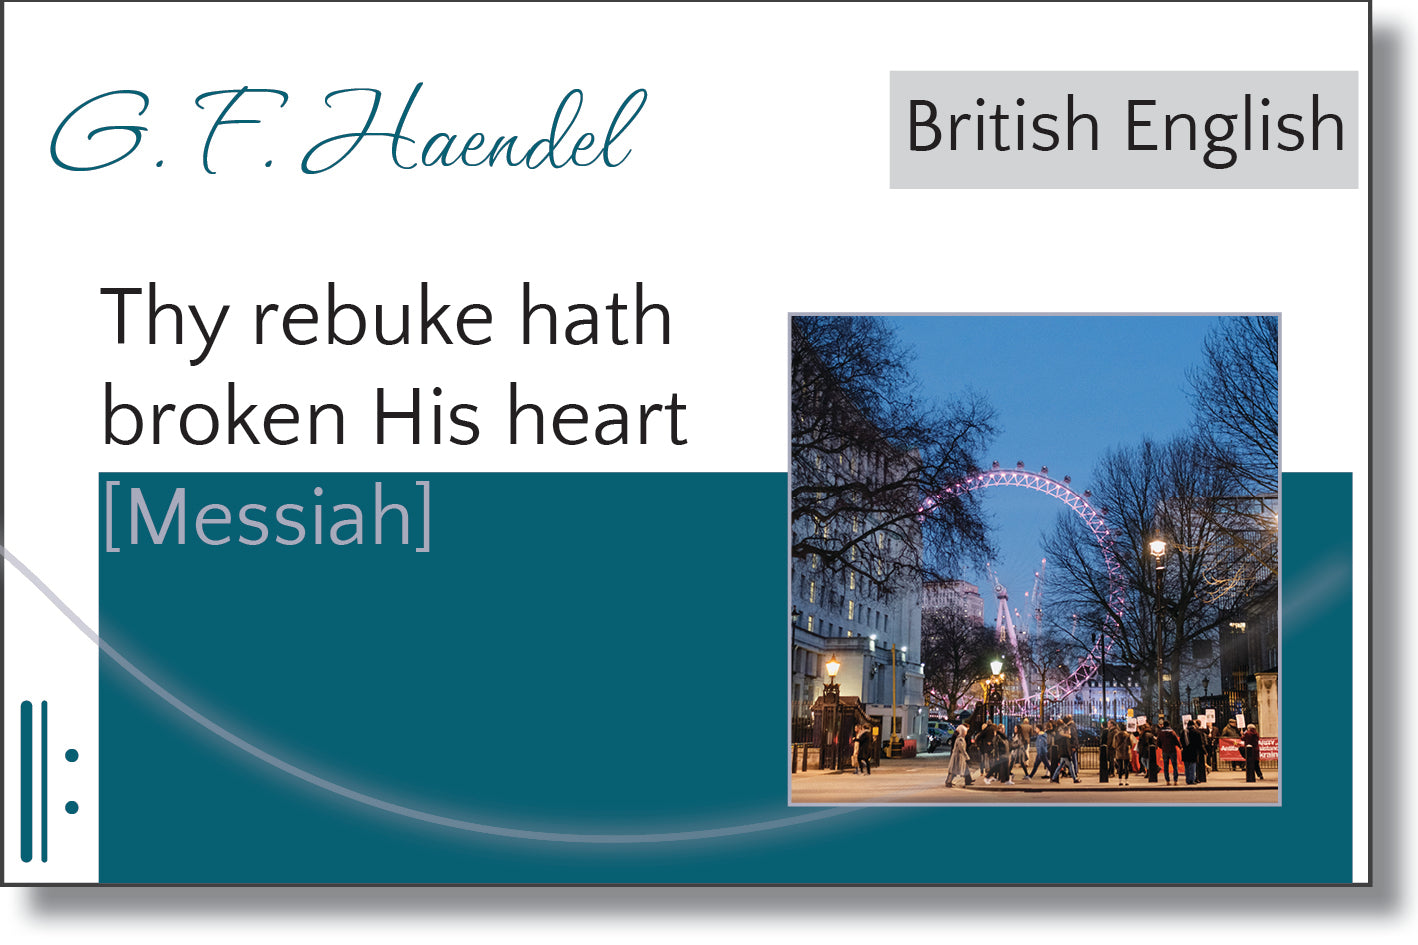 Messiah - Thy rebuke hath broken His heart